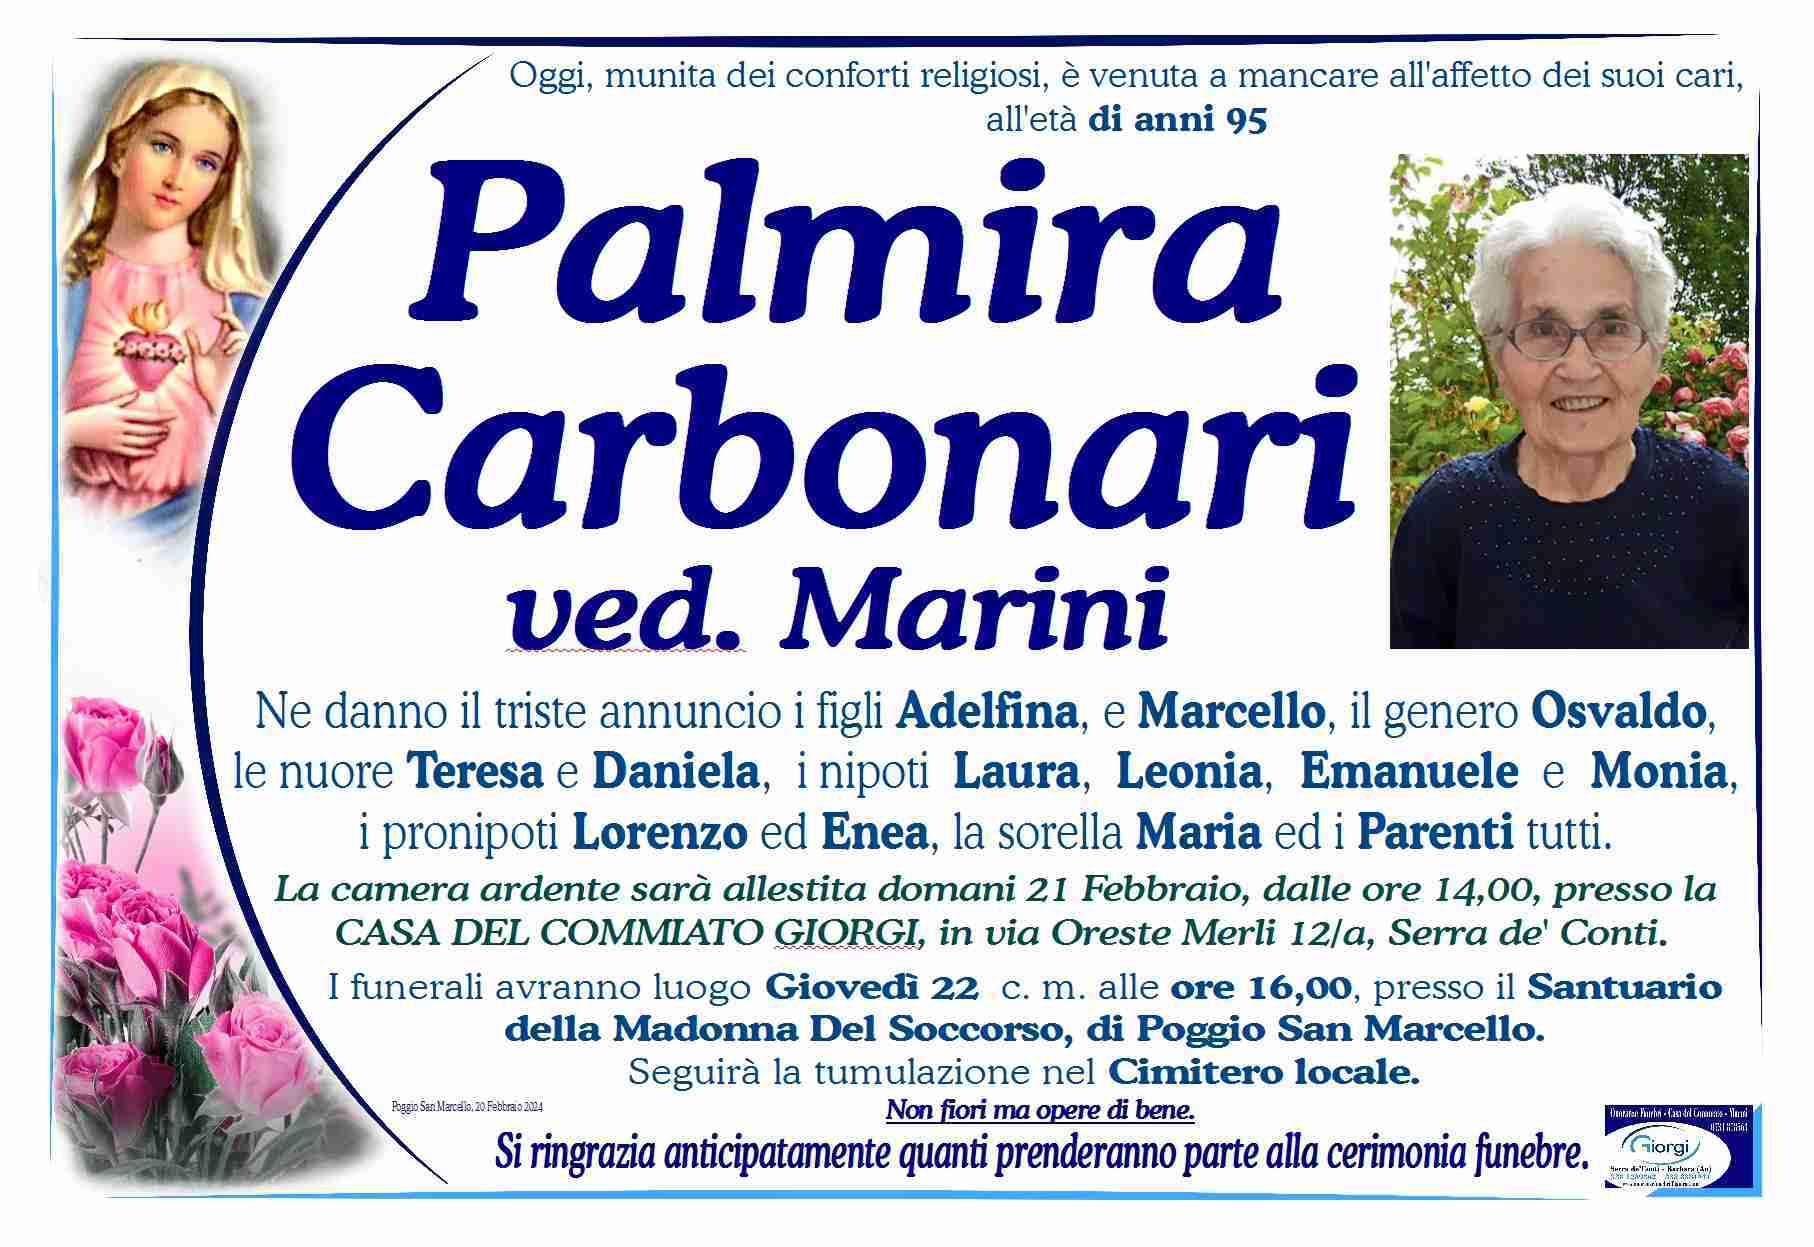 Palmira Carbonari